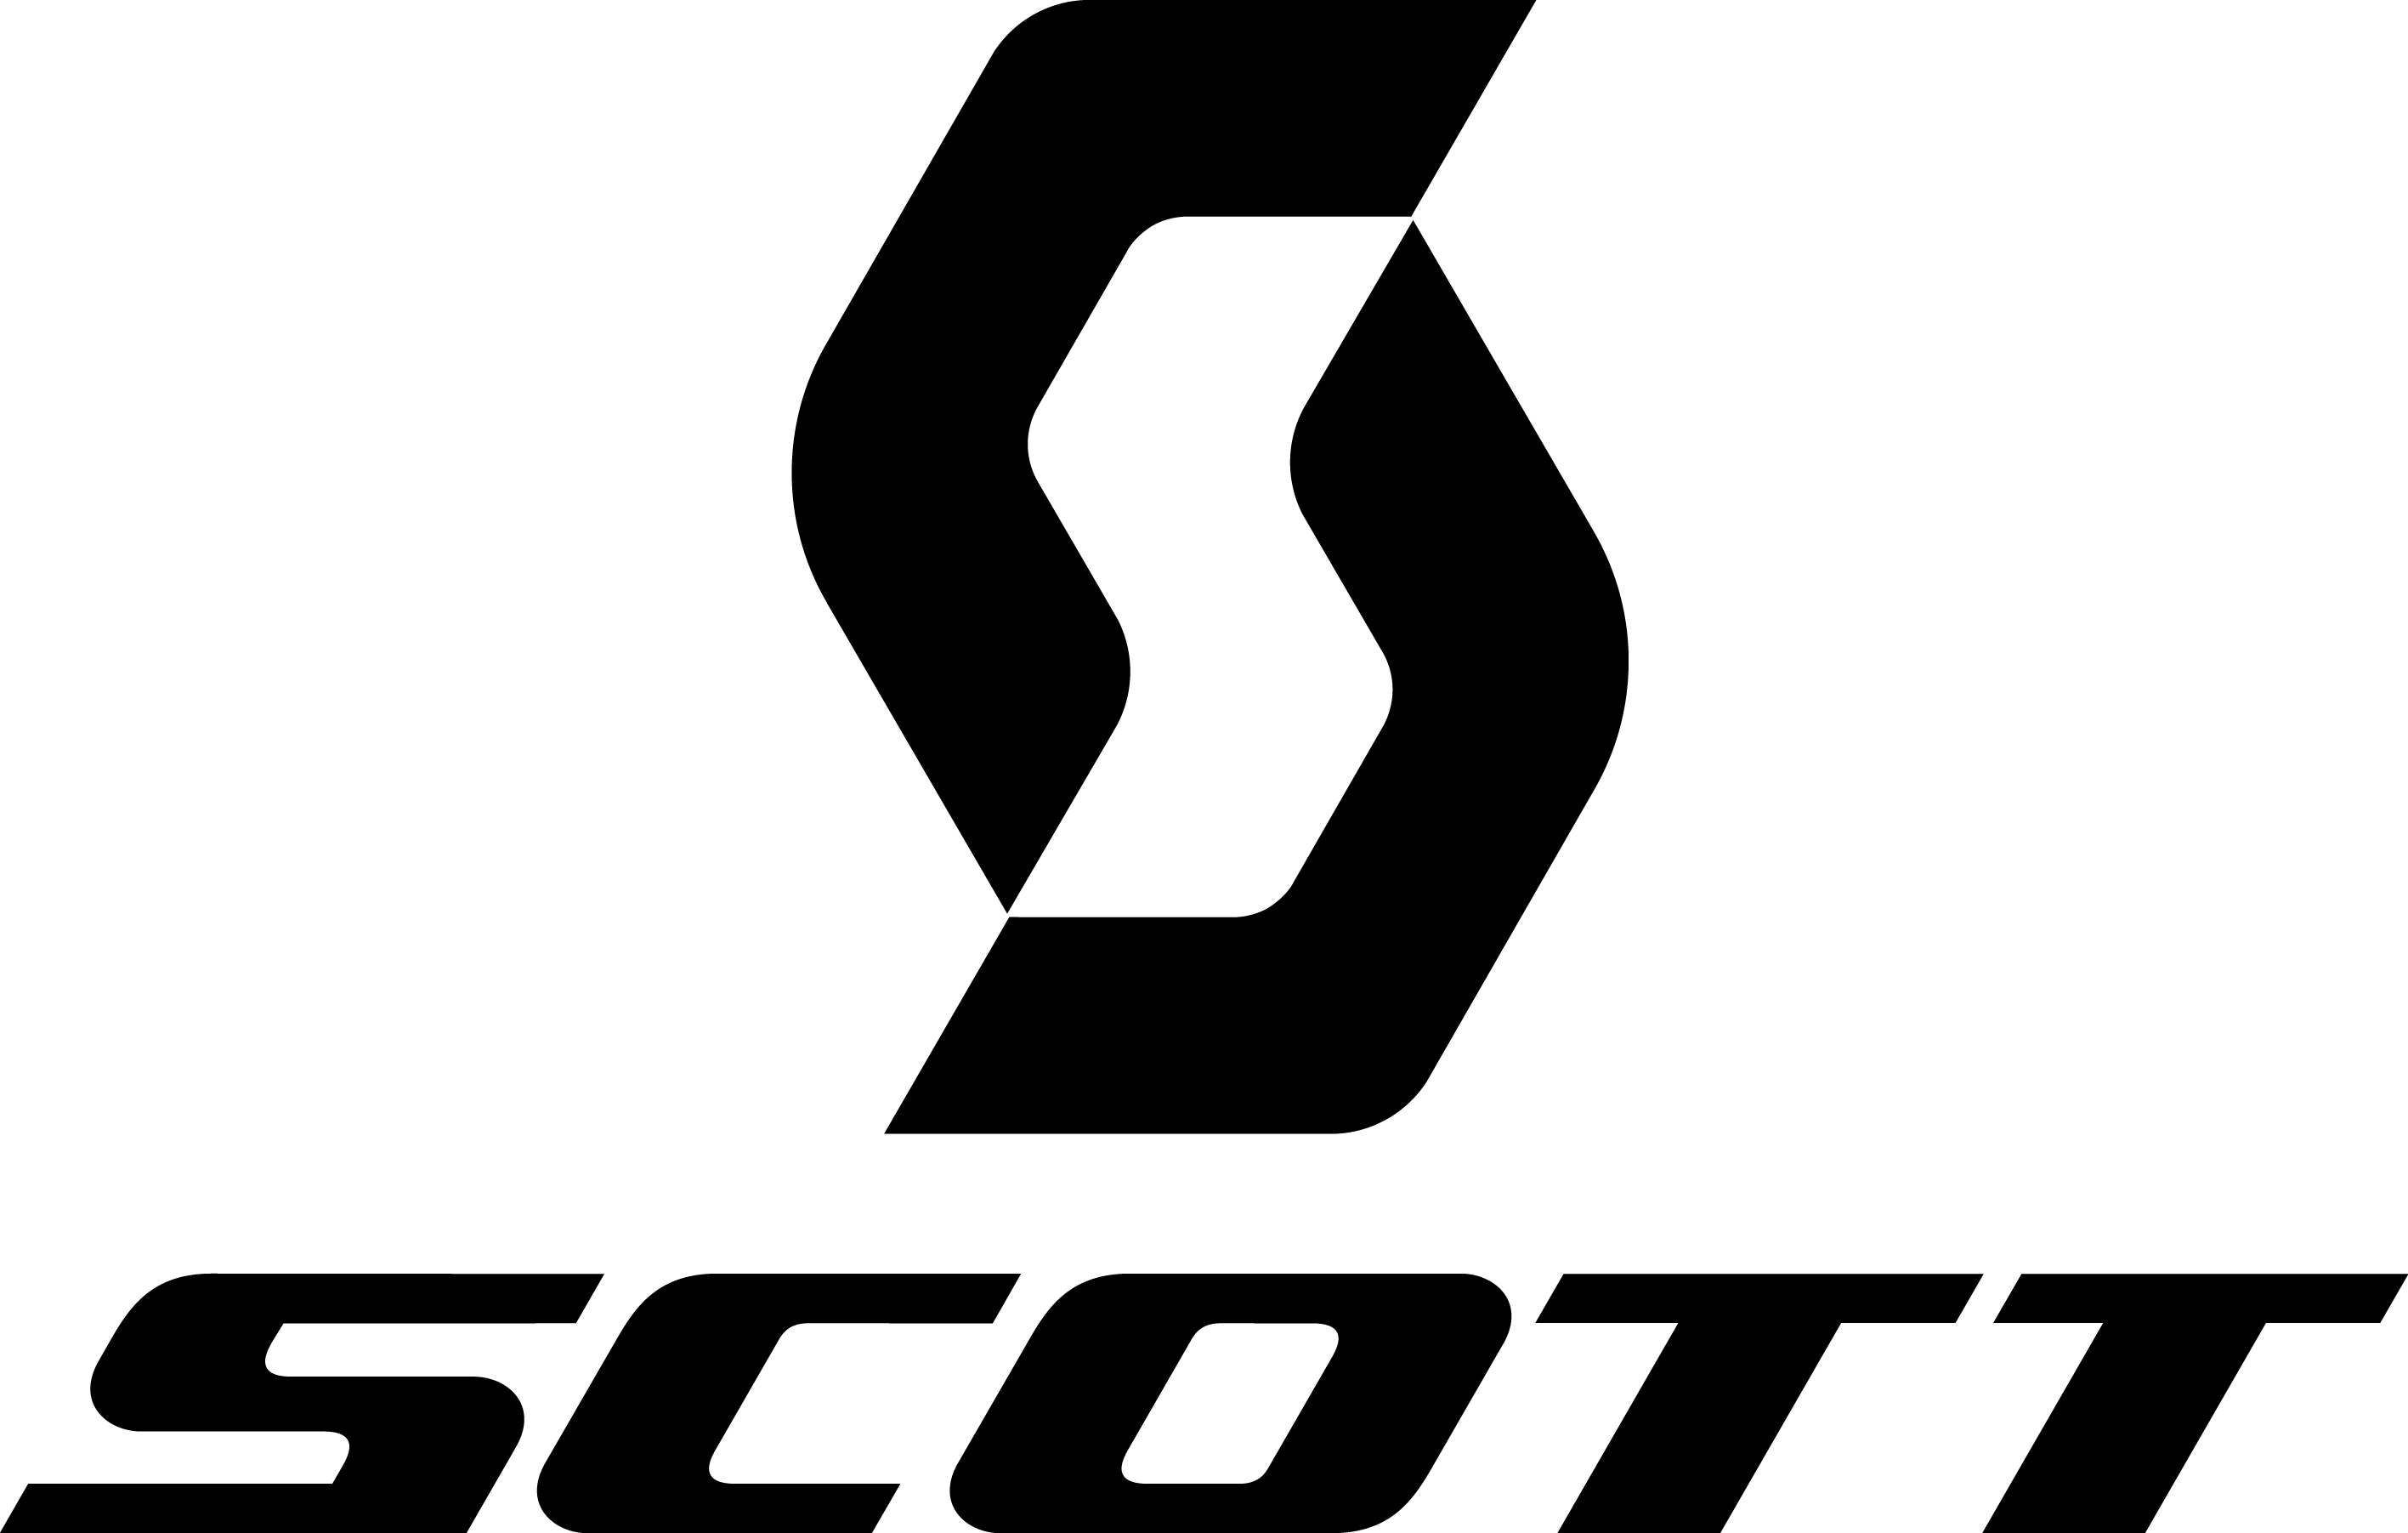 The Scott Bicycles logo reads "Scott" under a stylized "S."